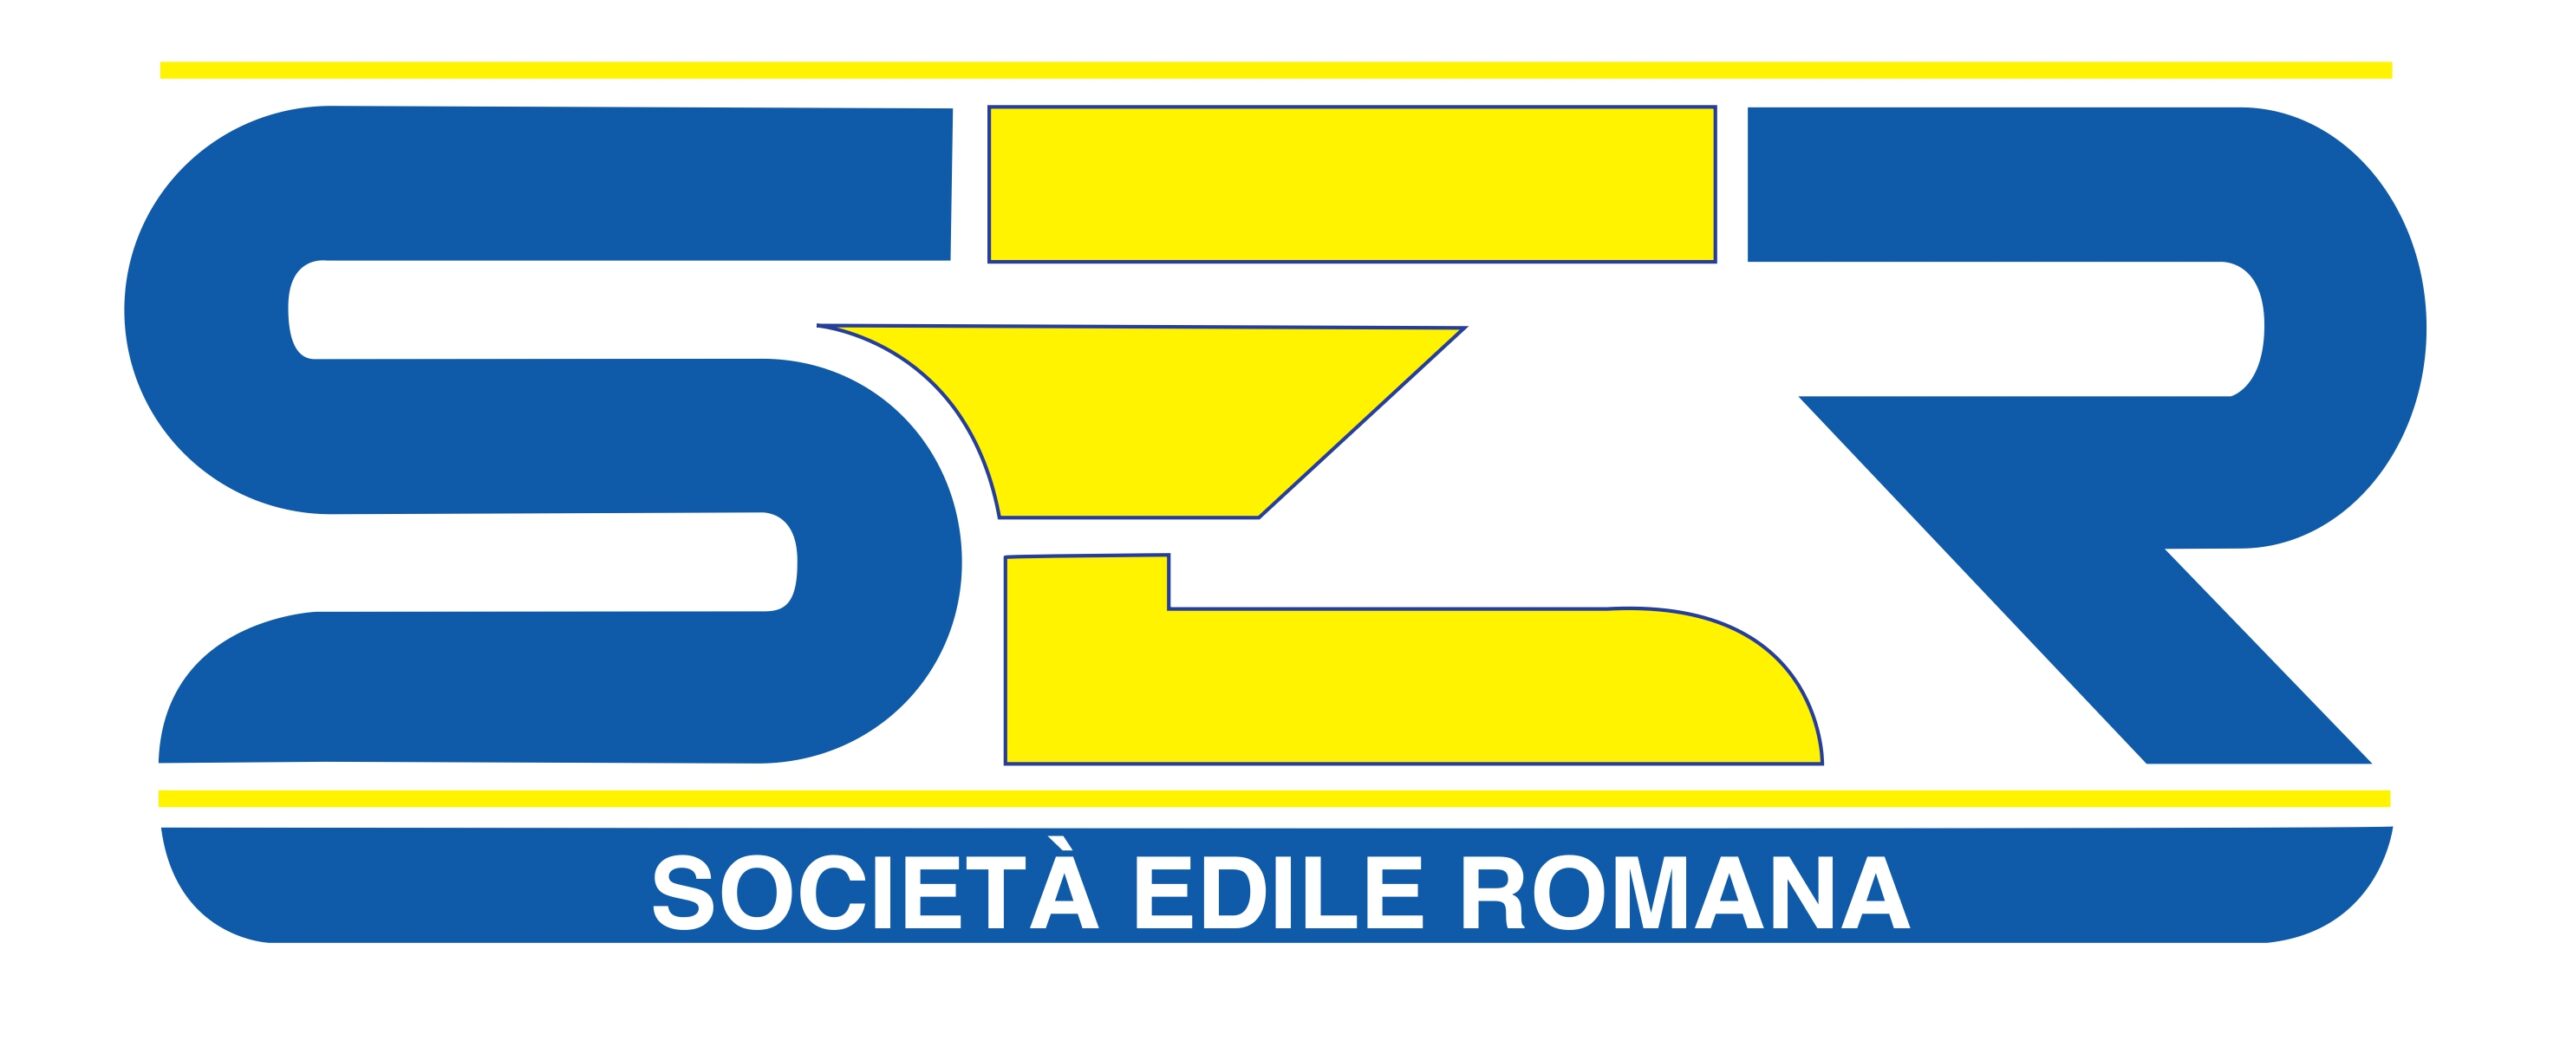 LOGO_Societa-edile-romana_Vettoriale_Nuovo_page-0001-1.jpg